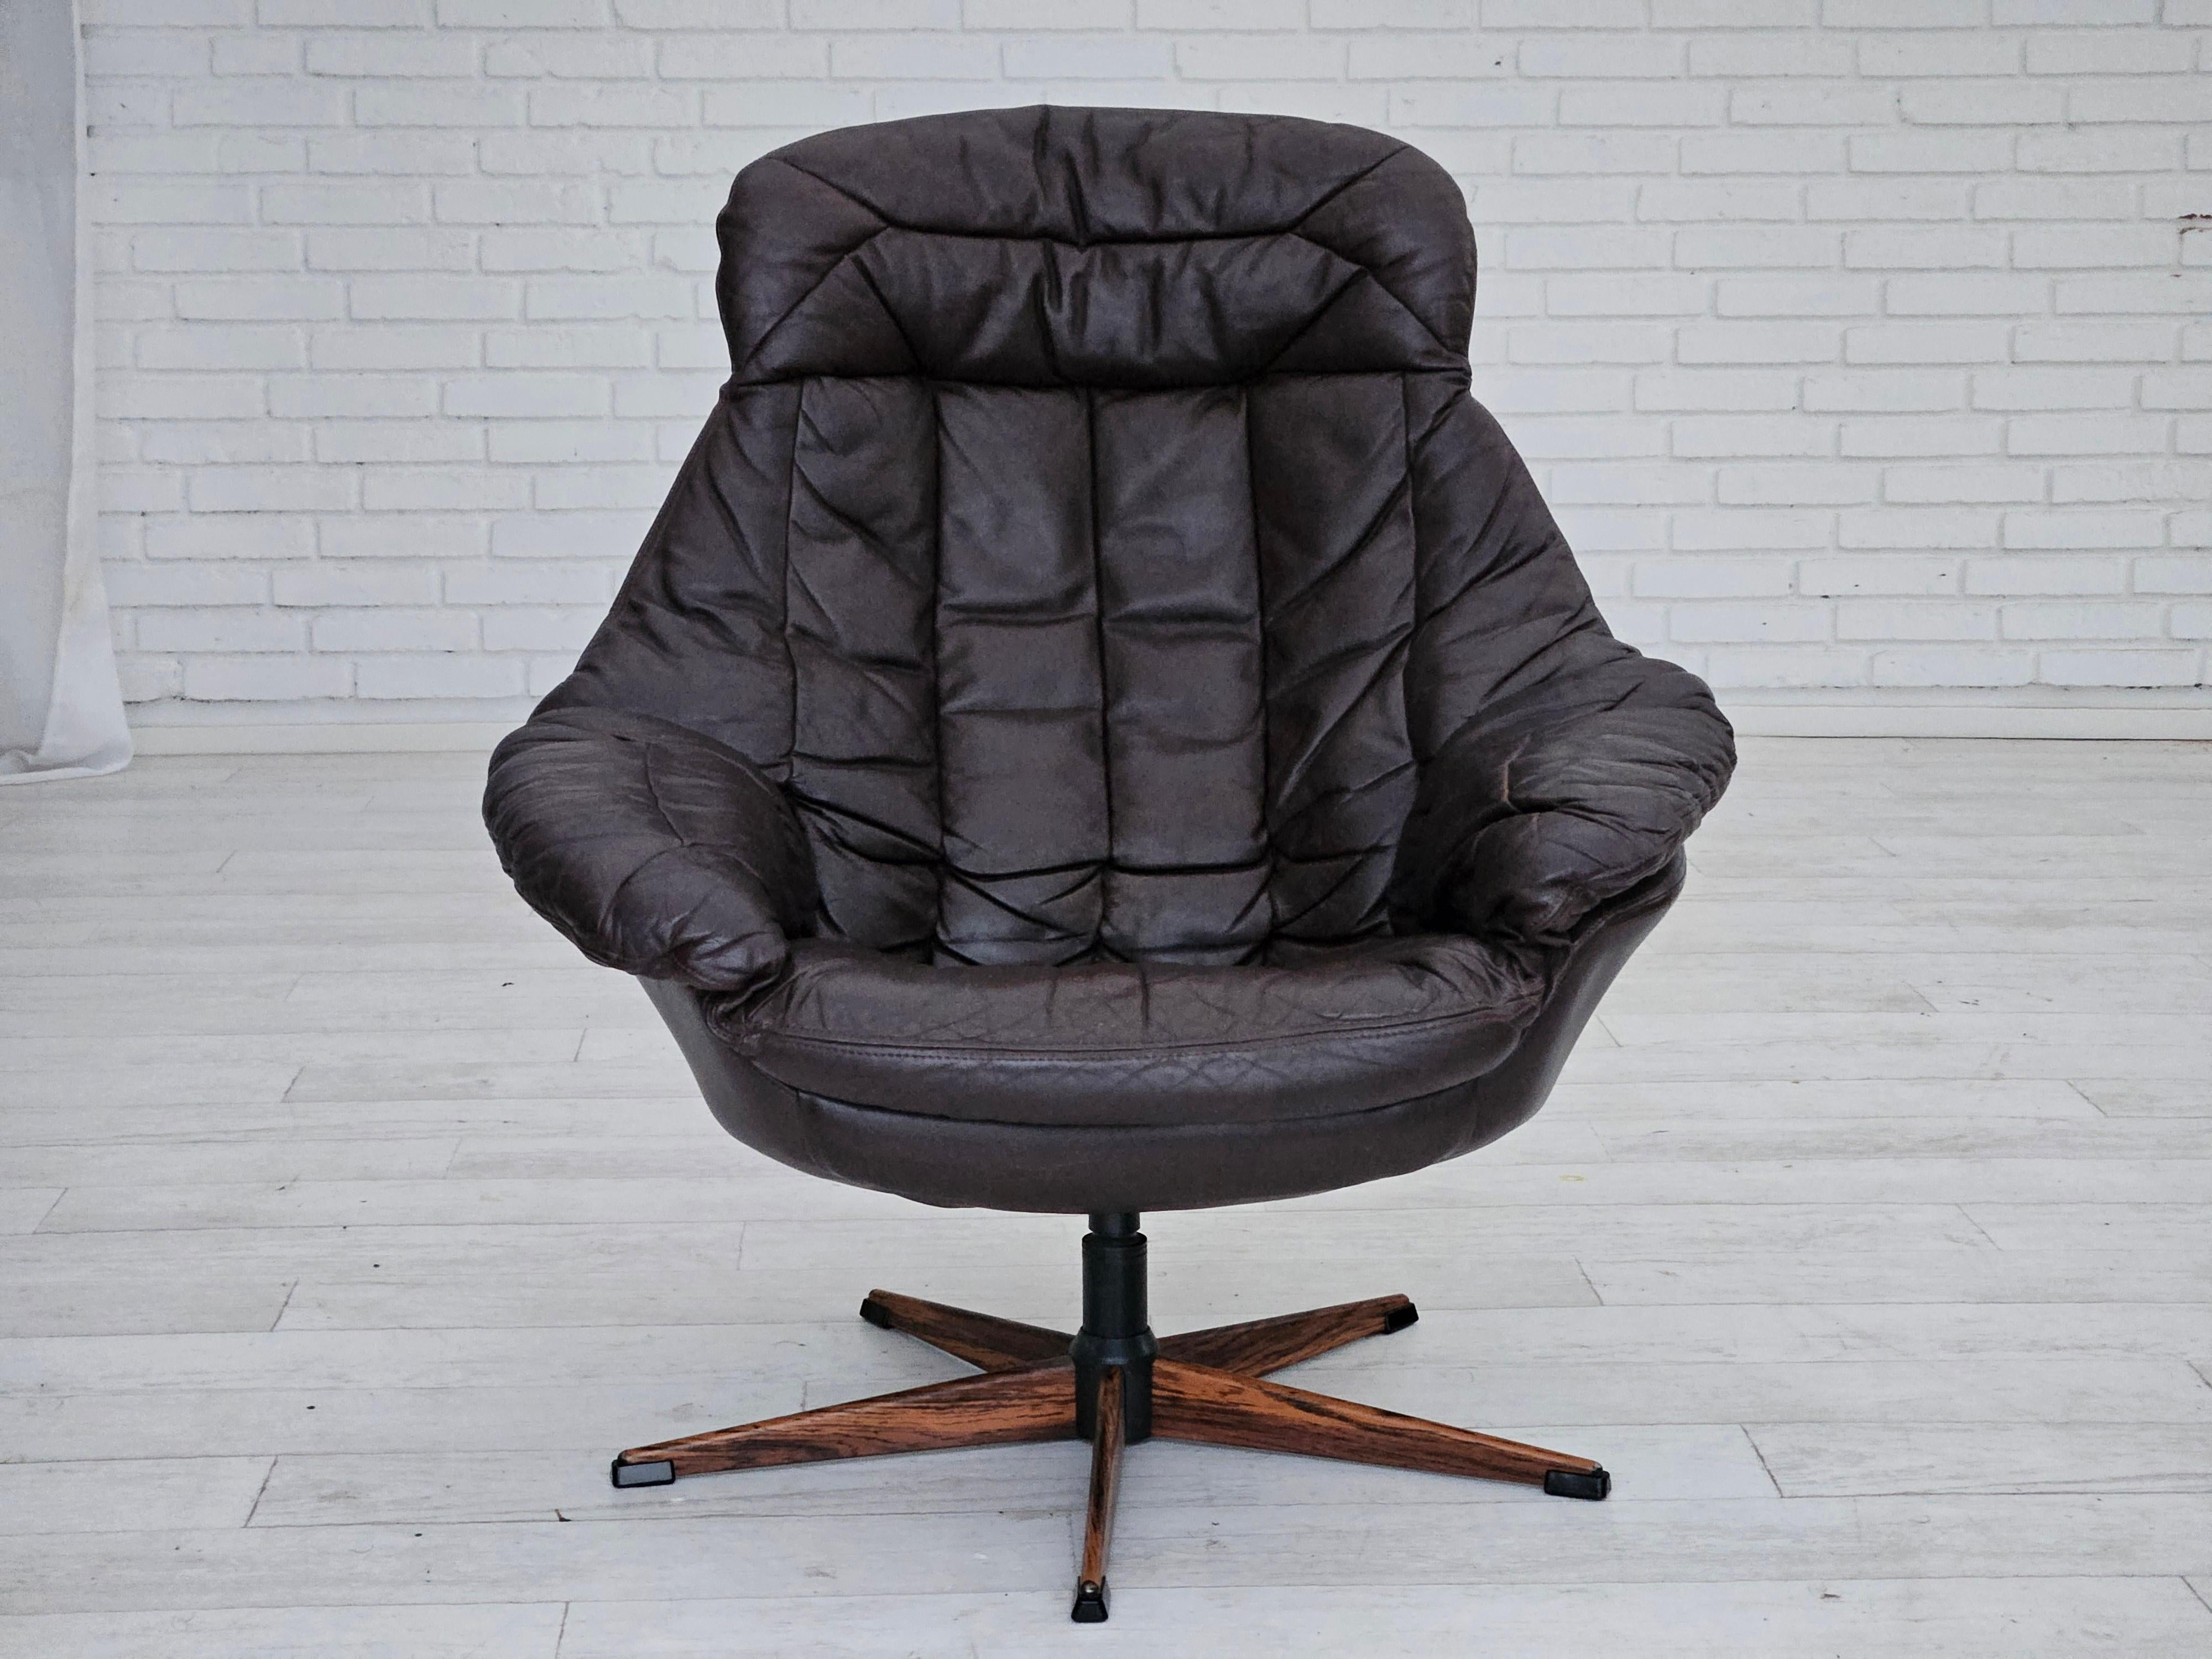 1970s, Danish design by Henry Walter Klein, swivel chair model 